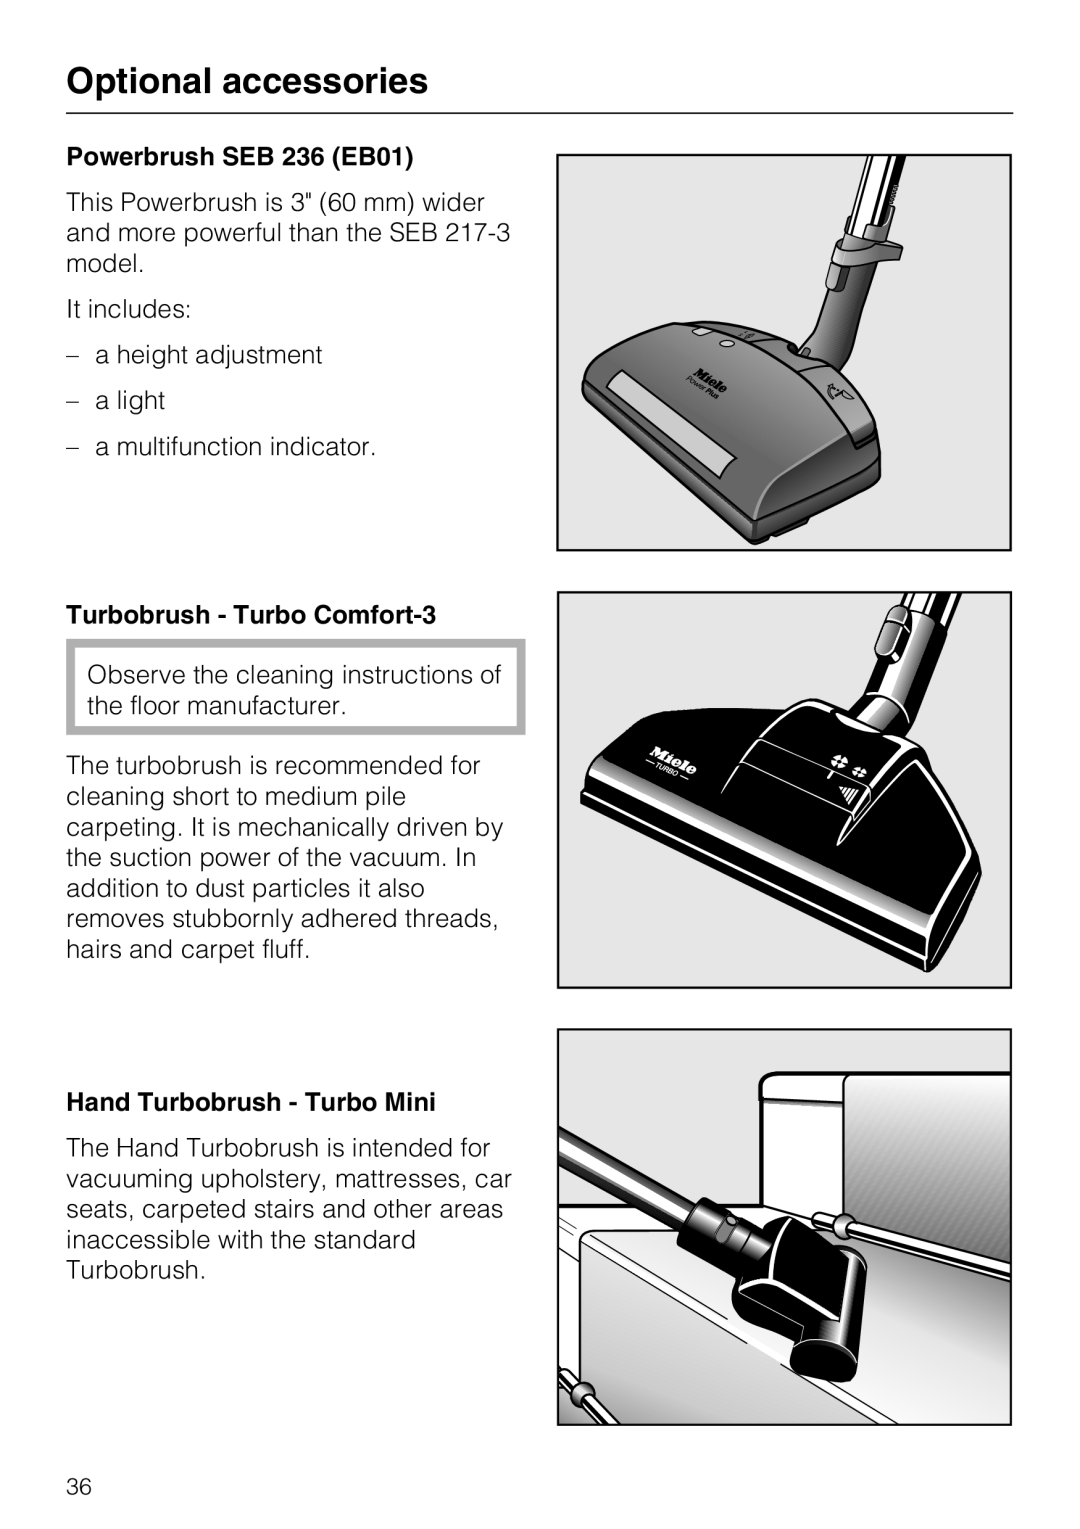 Miele S 5001 Optional accessories, Powerbrush SEB 236 EB01, Turbobrush - Turbo Comfort-3, Hand Turbobrush - Turbo Mini 